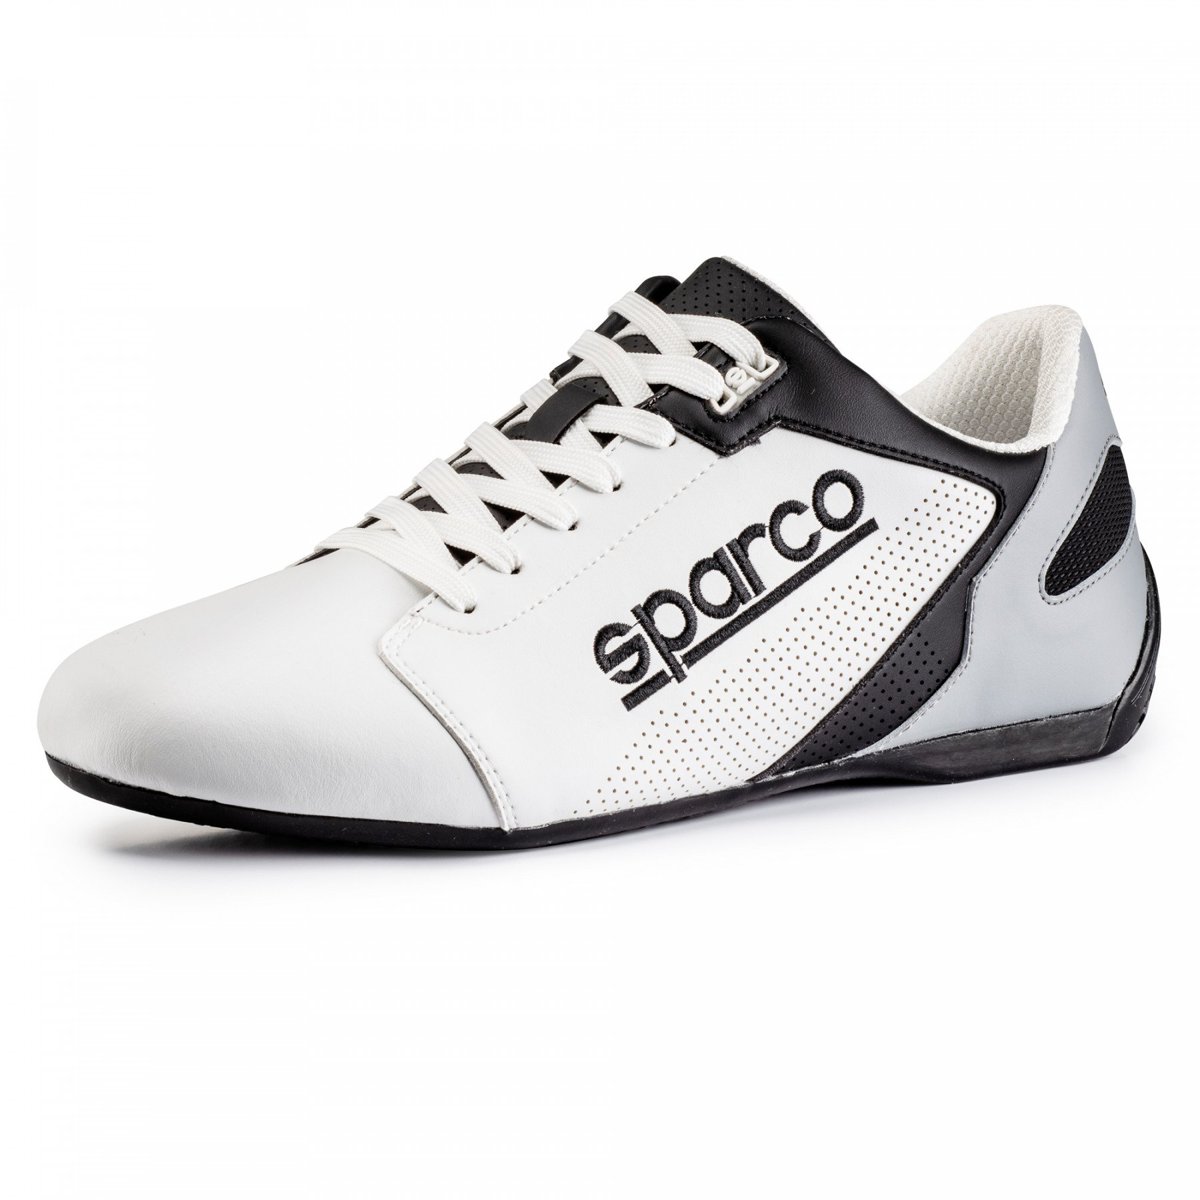 Zapato deportivo Ratio Siroco by Sparco - 40